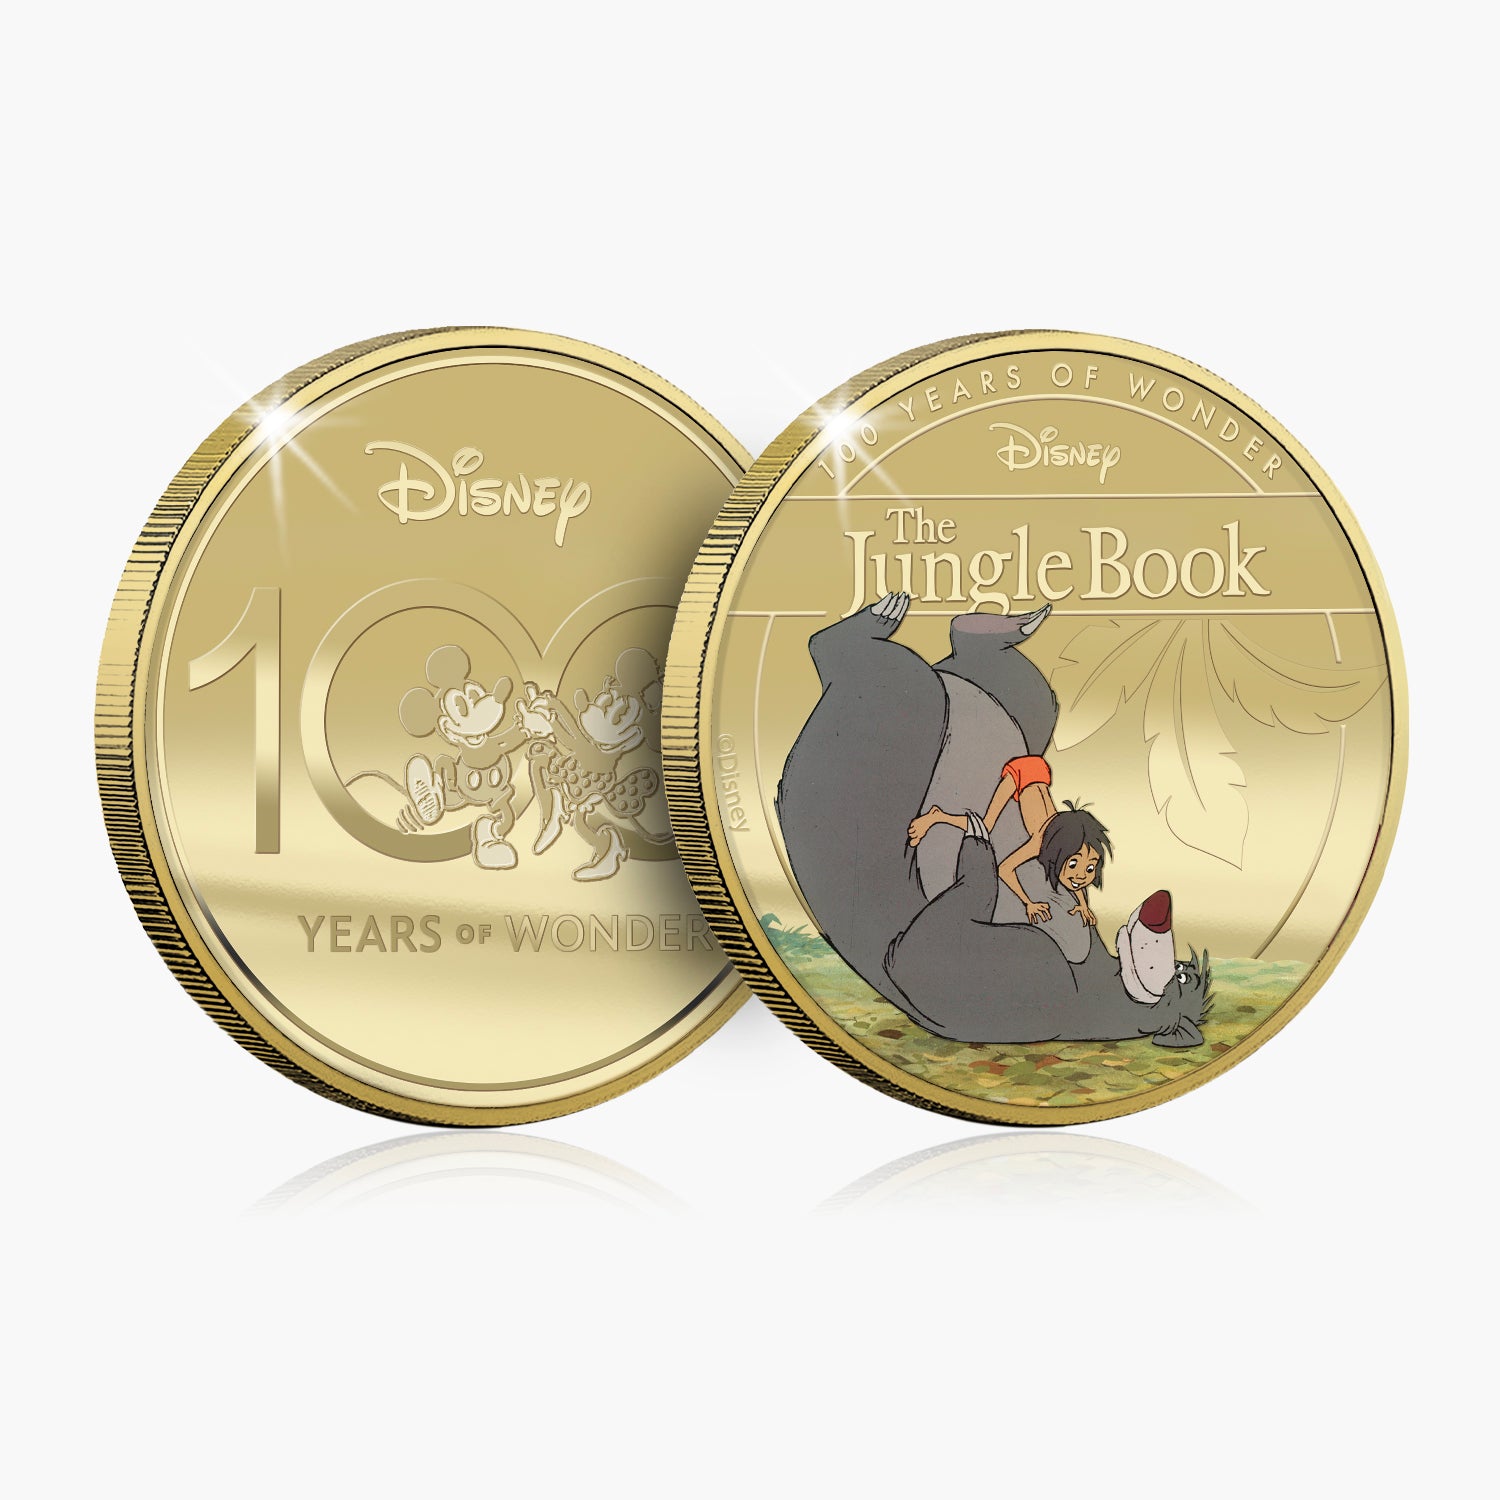 D100 Disney Jungle Book Gold Plated Commemorative